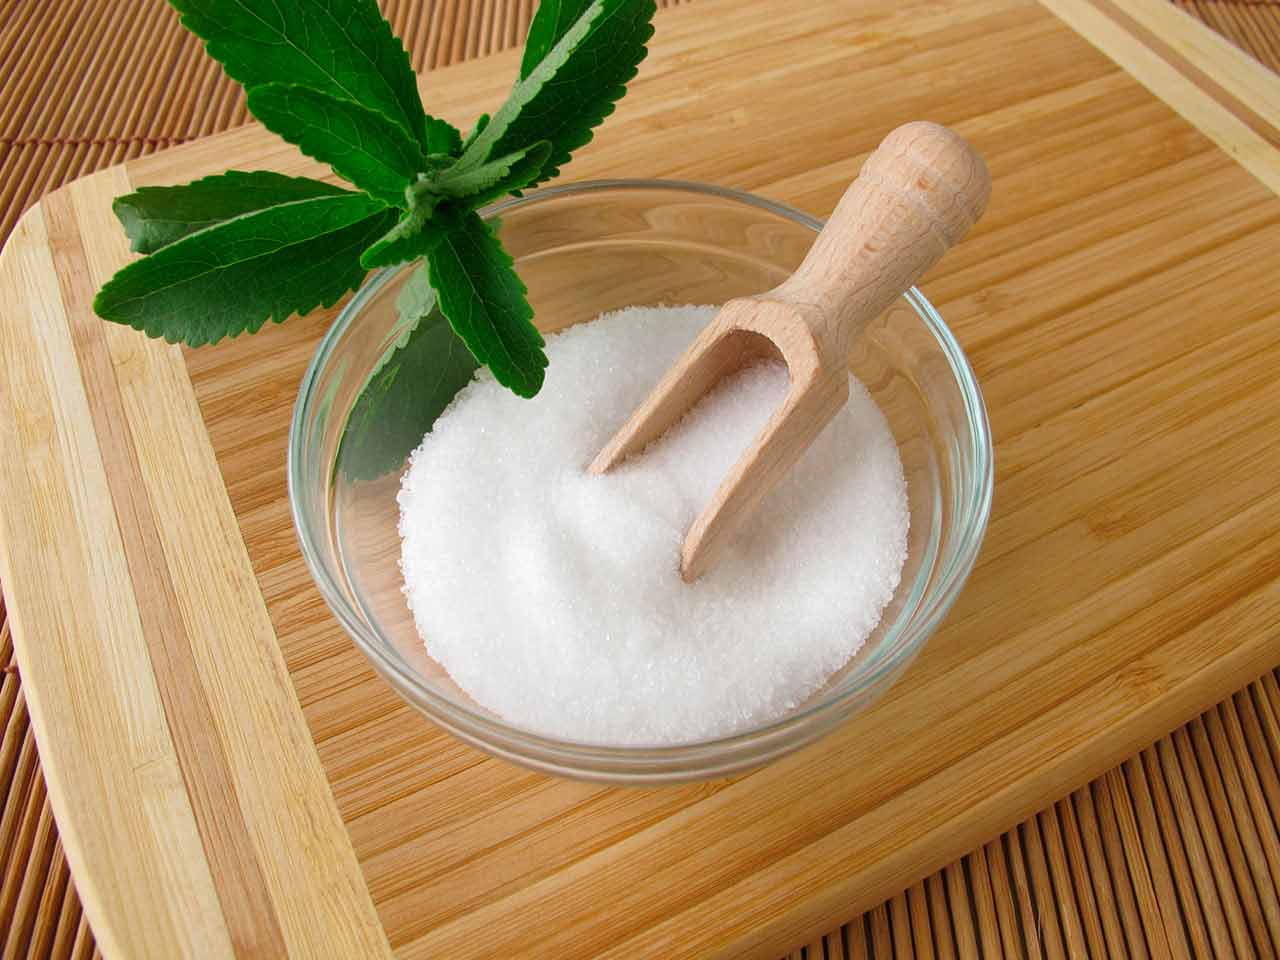 Stevia leaf and crystals, a sugar alternative